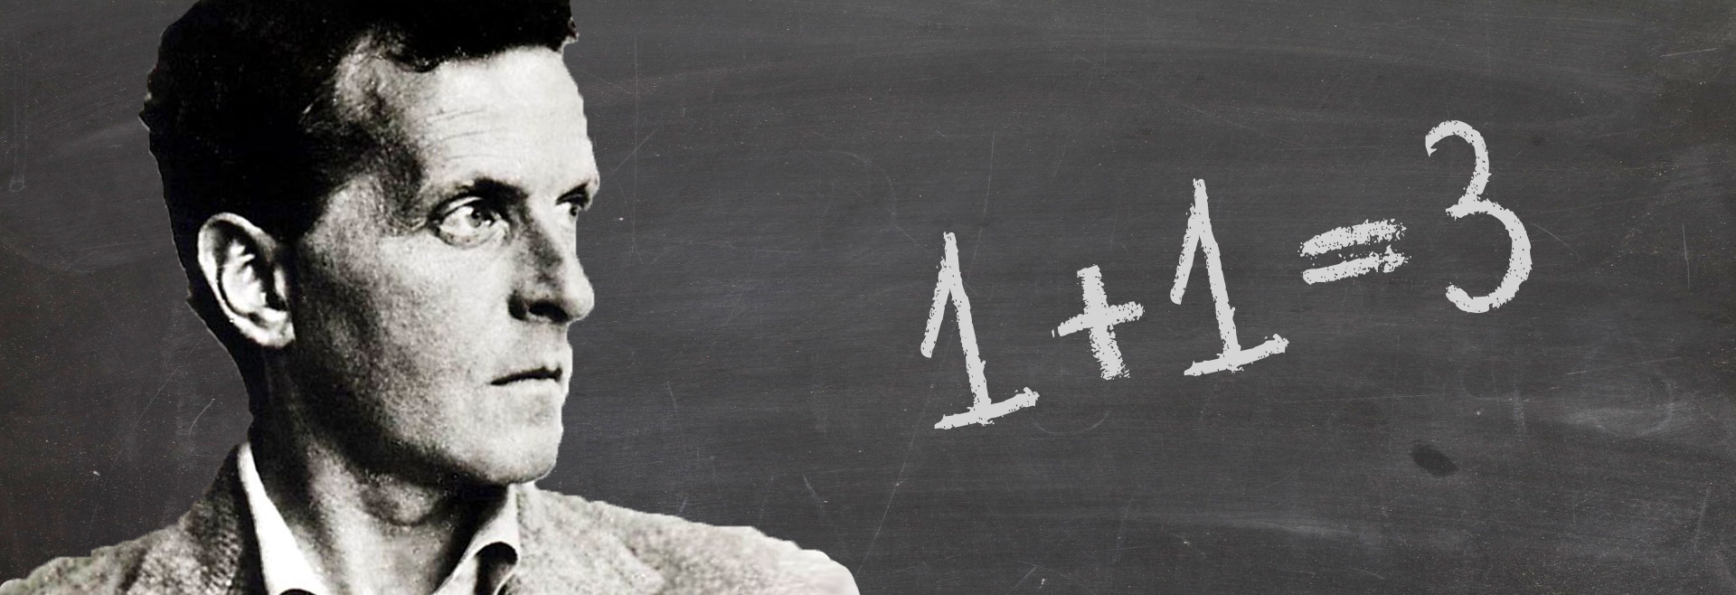 Wittgenstein looking at a blackboard saying 1+1=3